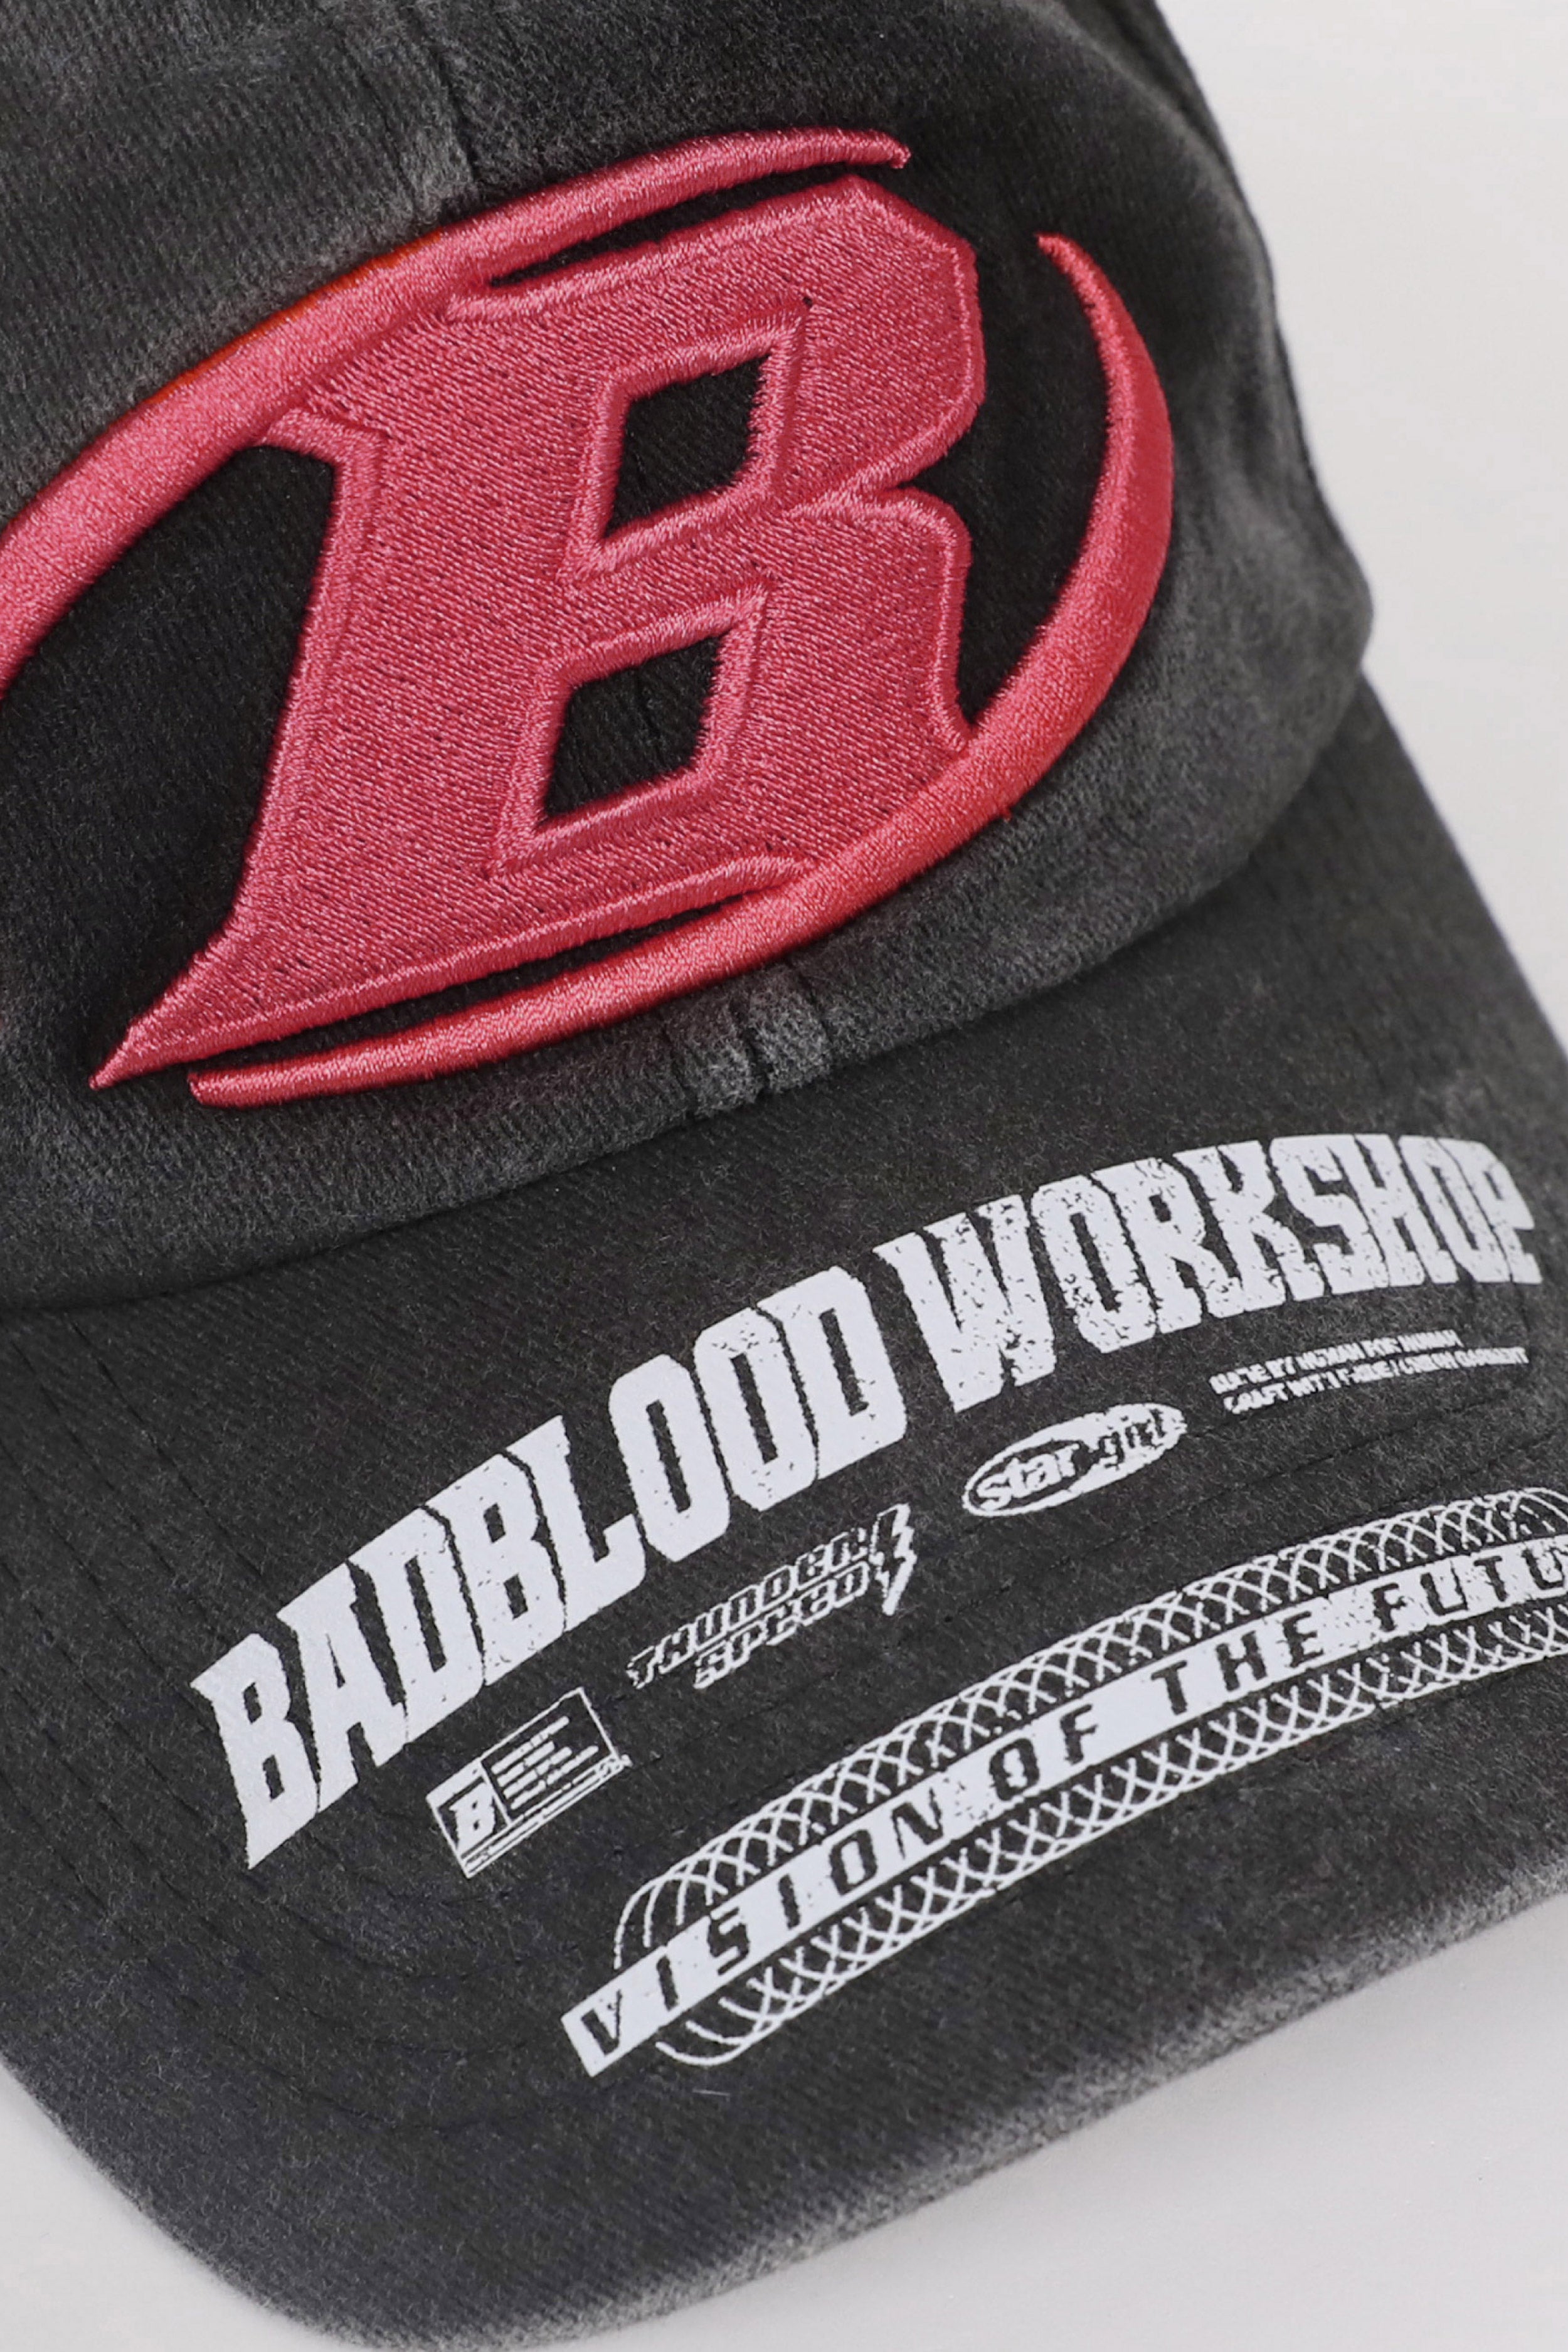 Badblood F1 舊效果球帽黑色